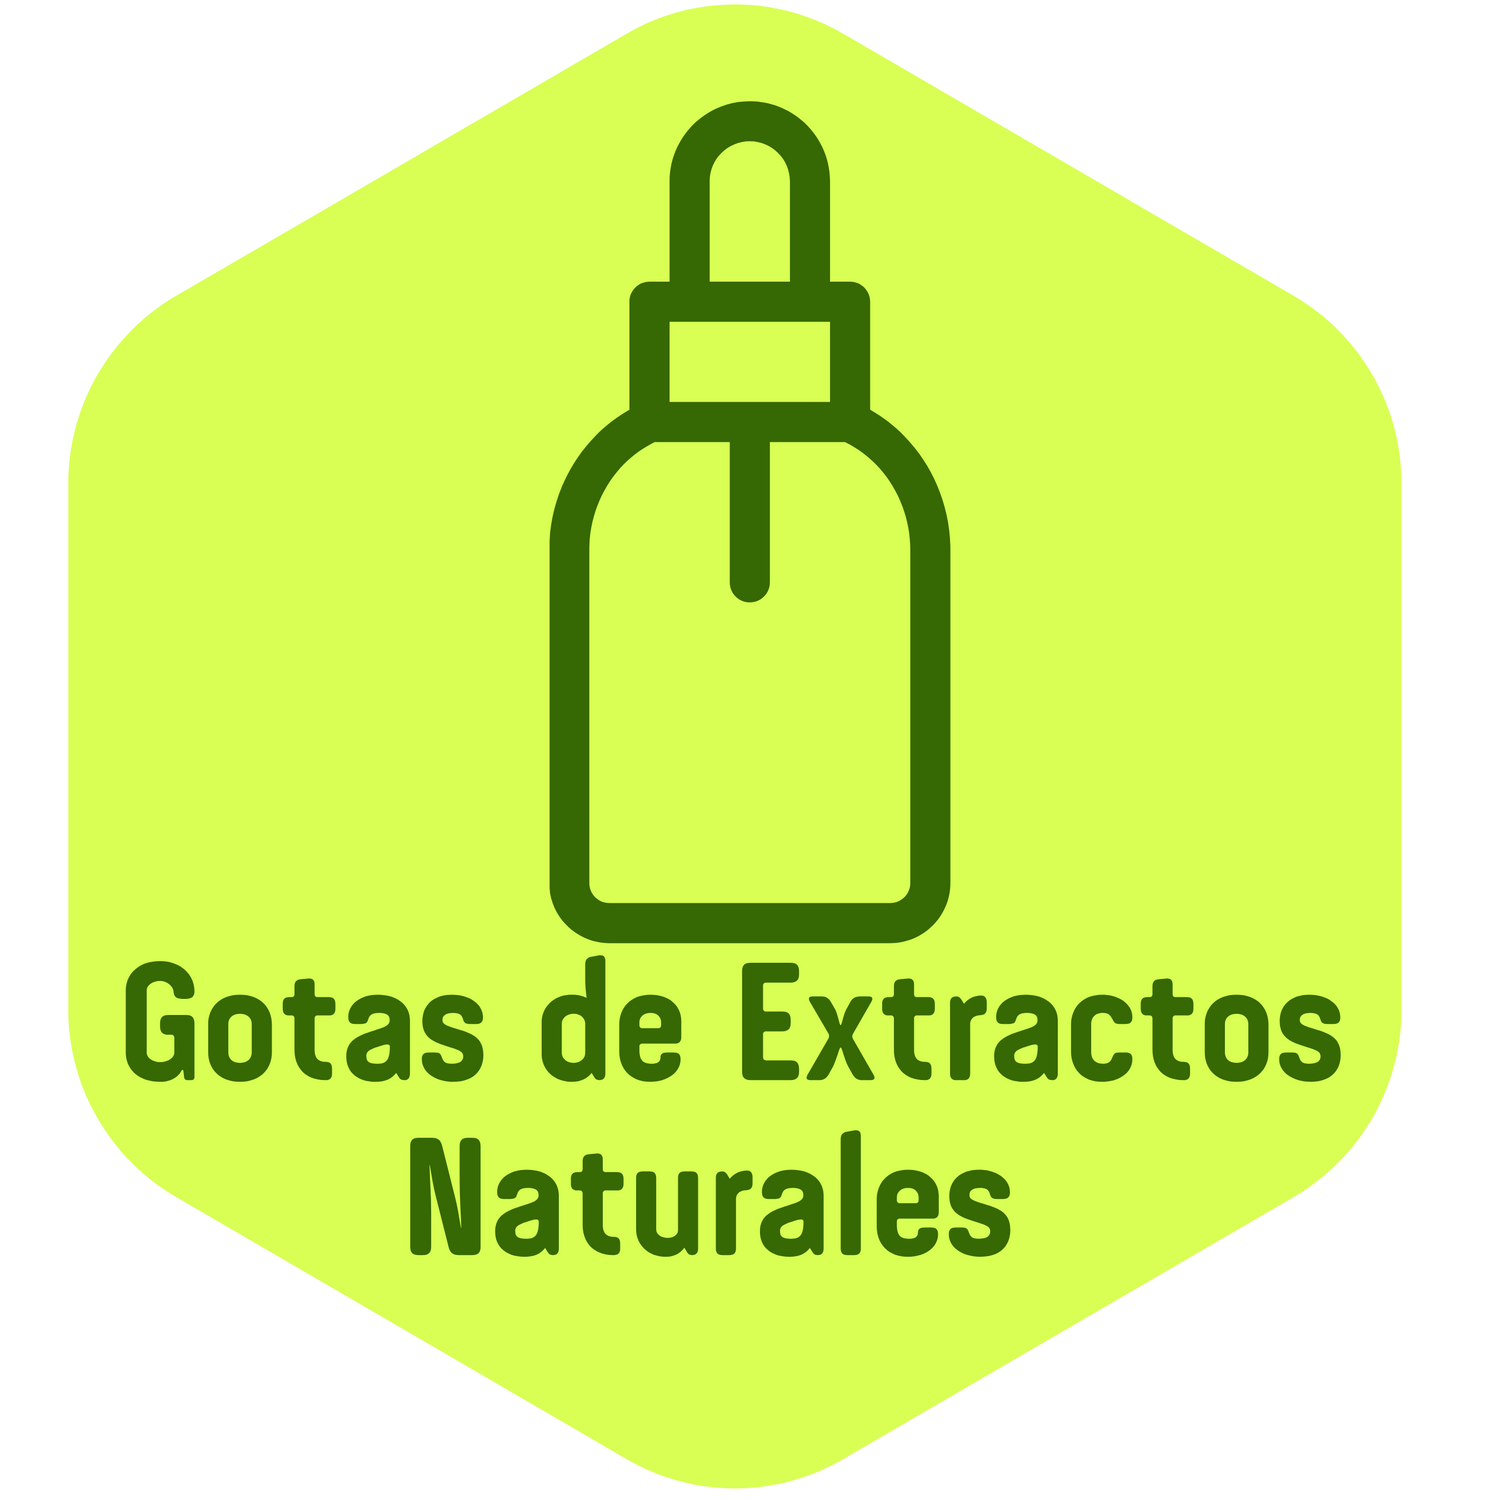 Gotas de Extractos Naturales